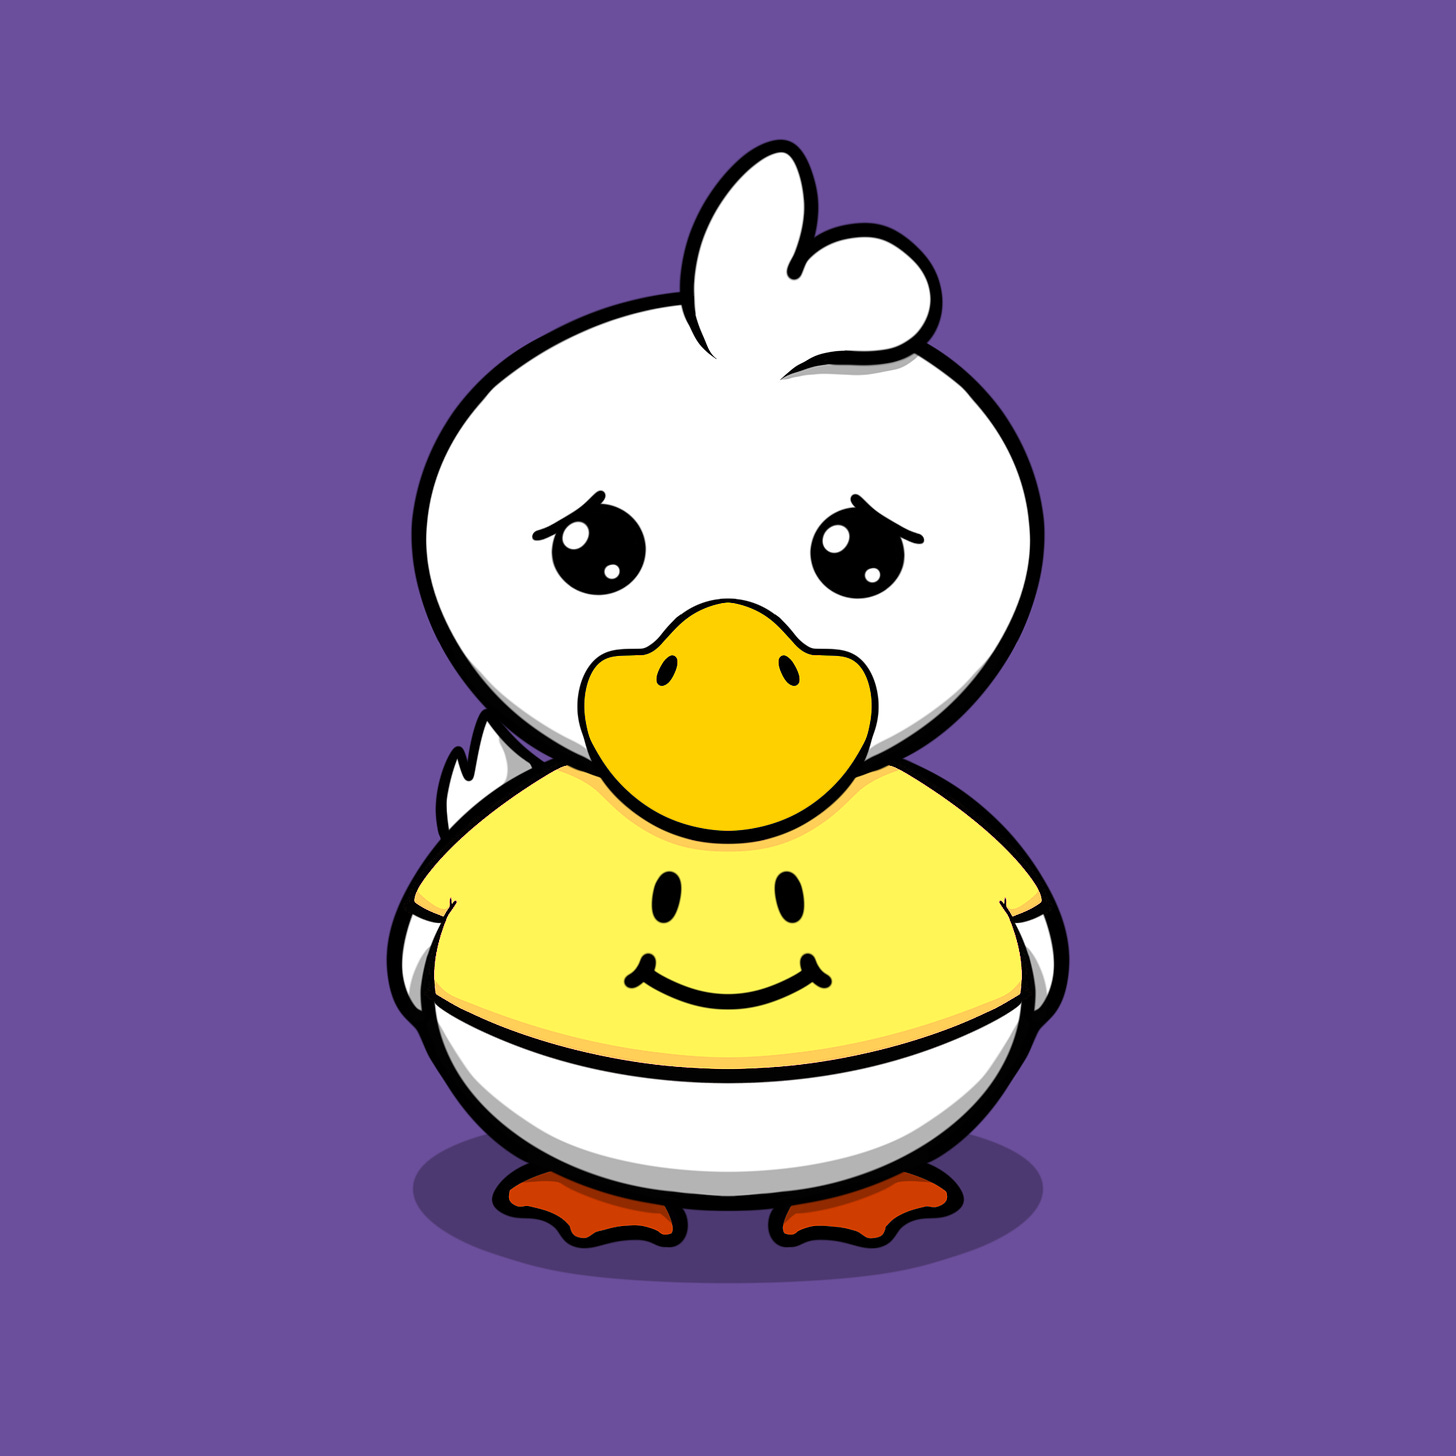 A sad duck on a purple background